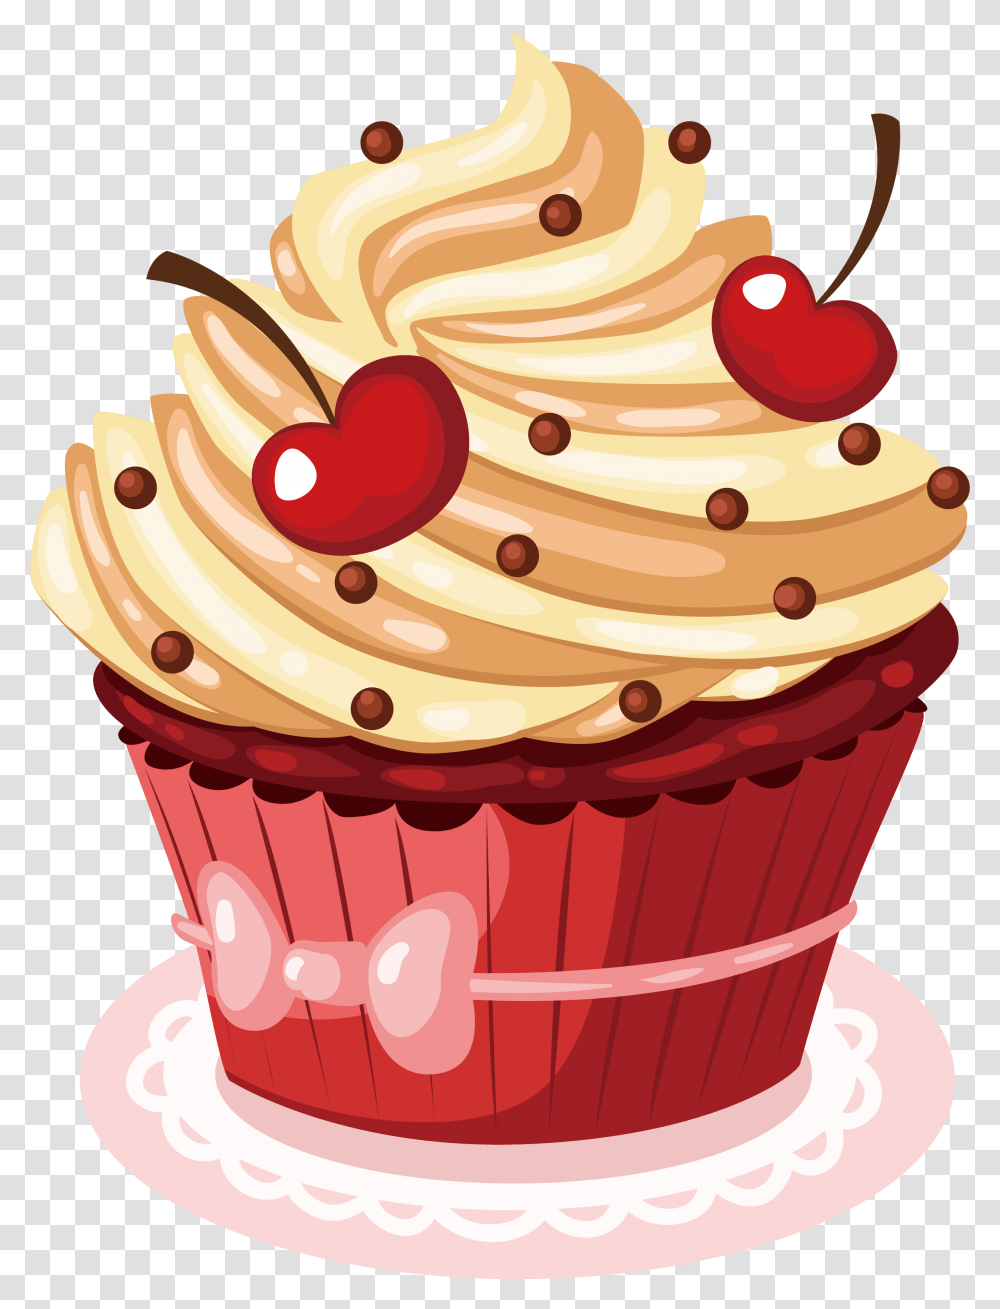 Happy Birthday To You Wish Greeting Card Desenho De Cupcake Colorido, Cream, Dessert, Food, Creme Transparent Png